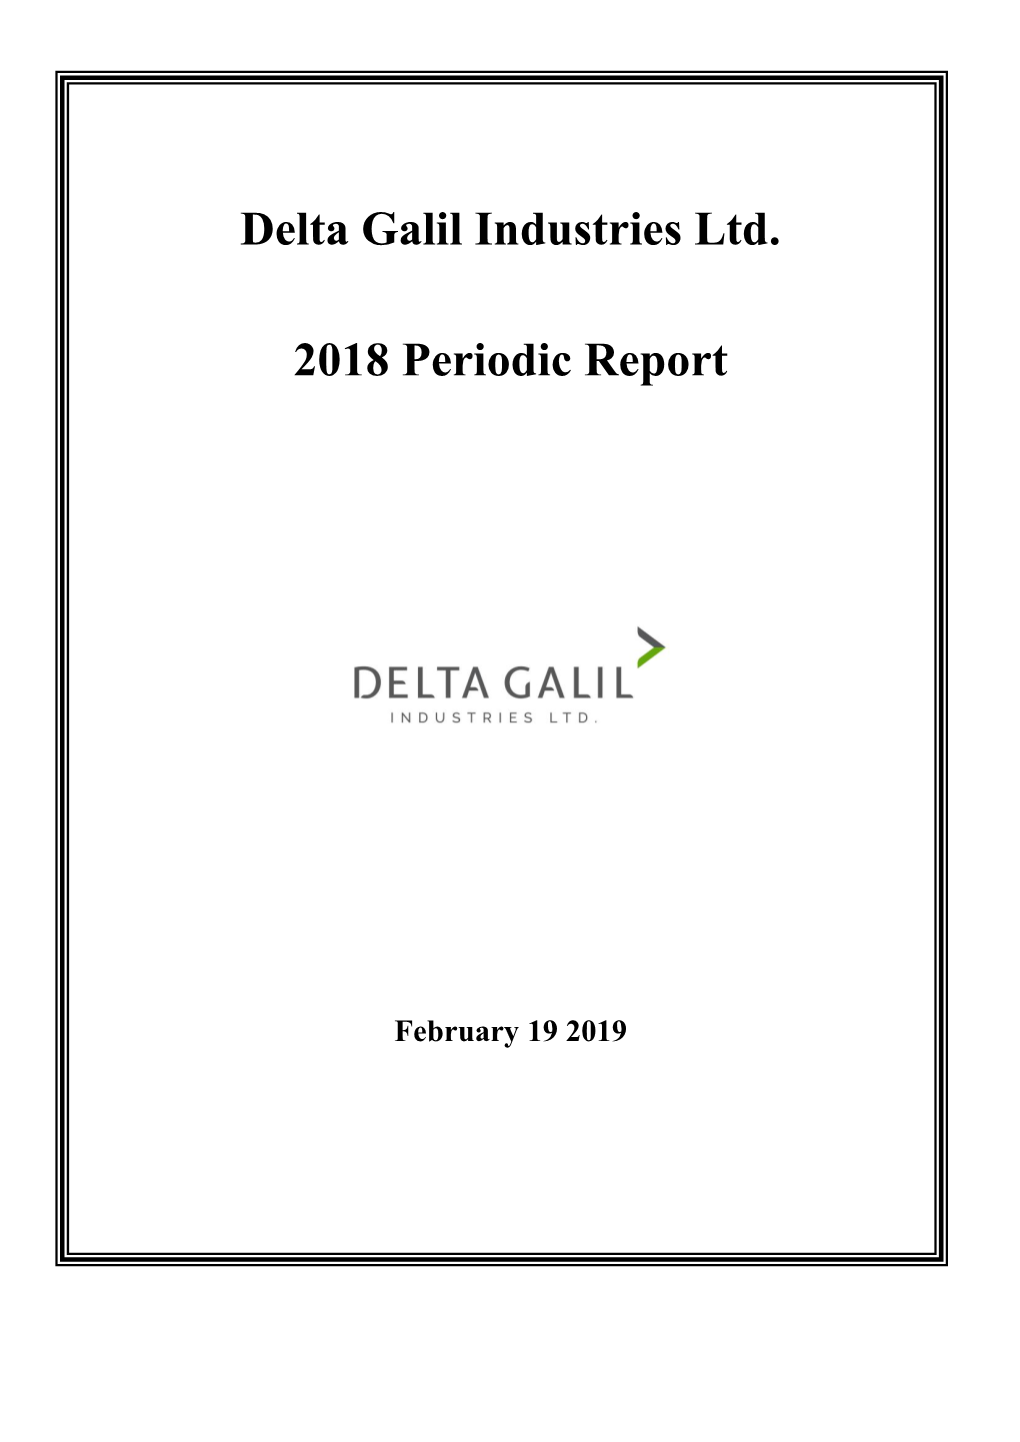 Delta Galil Industries Ltd. 2018 Periodic Report